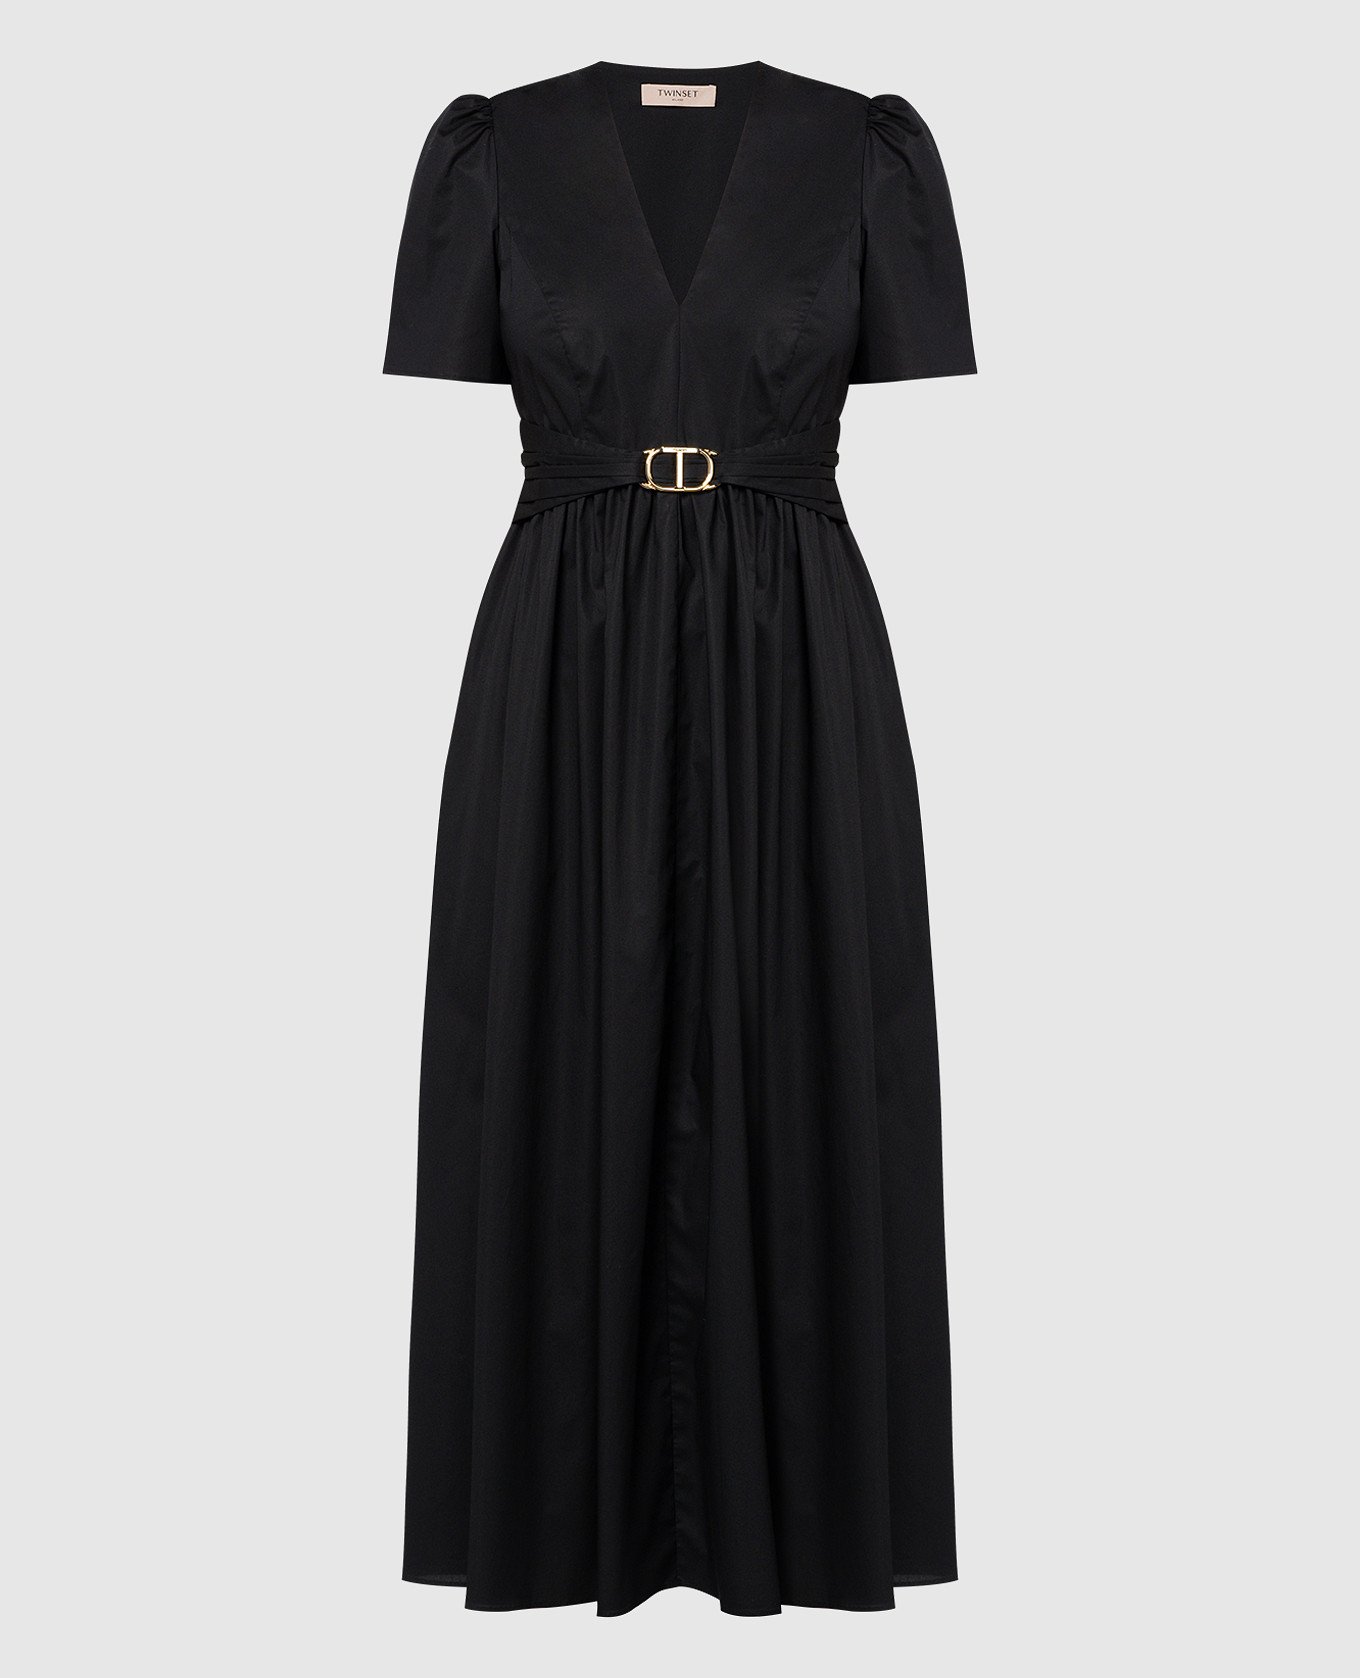 Black midi dress with drape and metallic logo